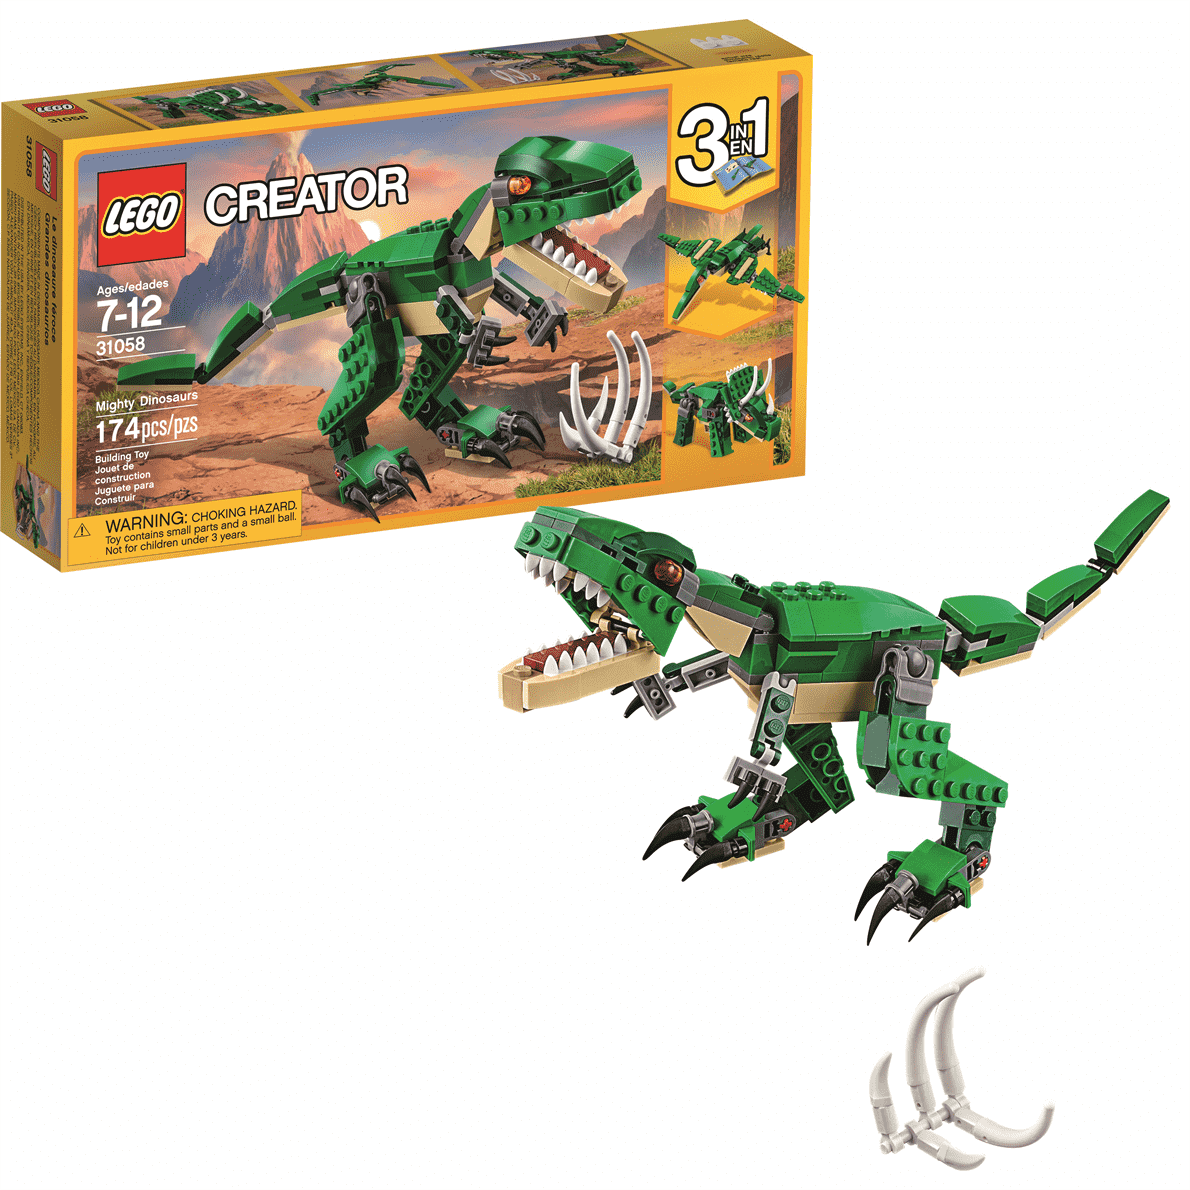 31058 Mighty Dinosaurs (Retired) LEGO Creator